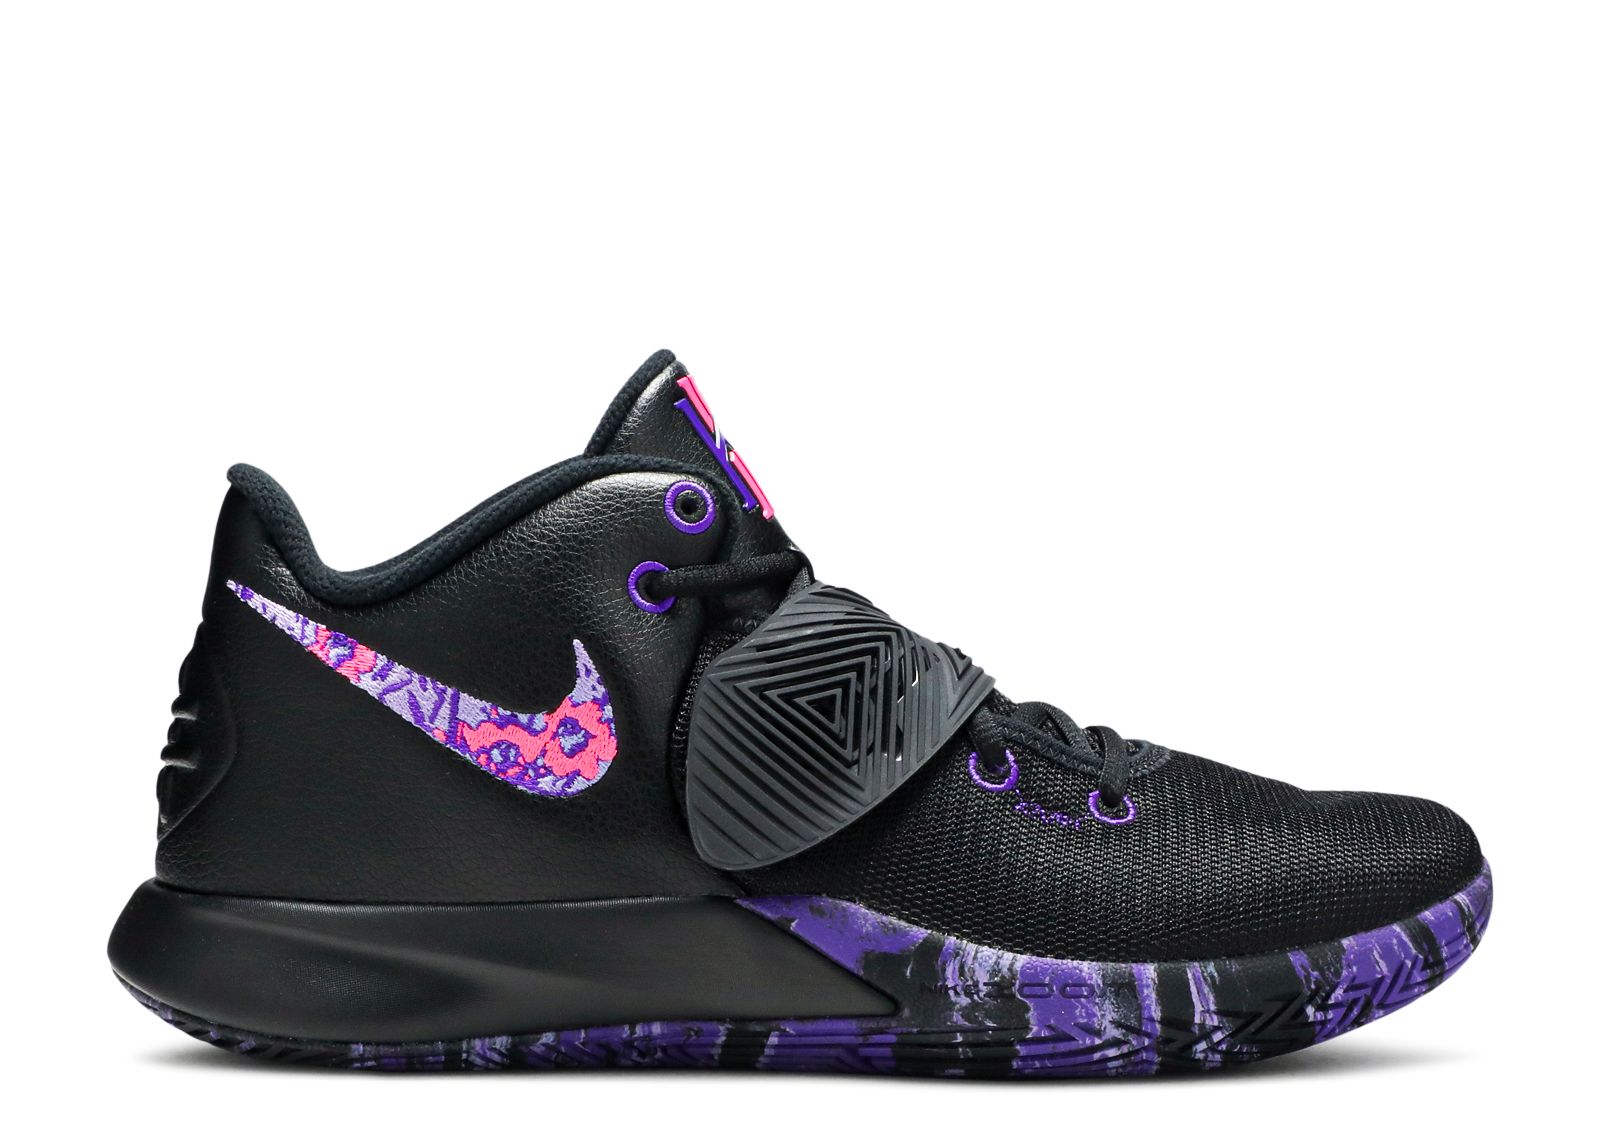 kyrie 2 shoes purple